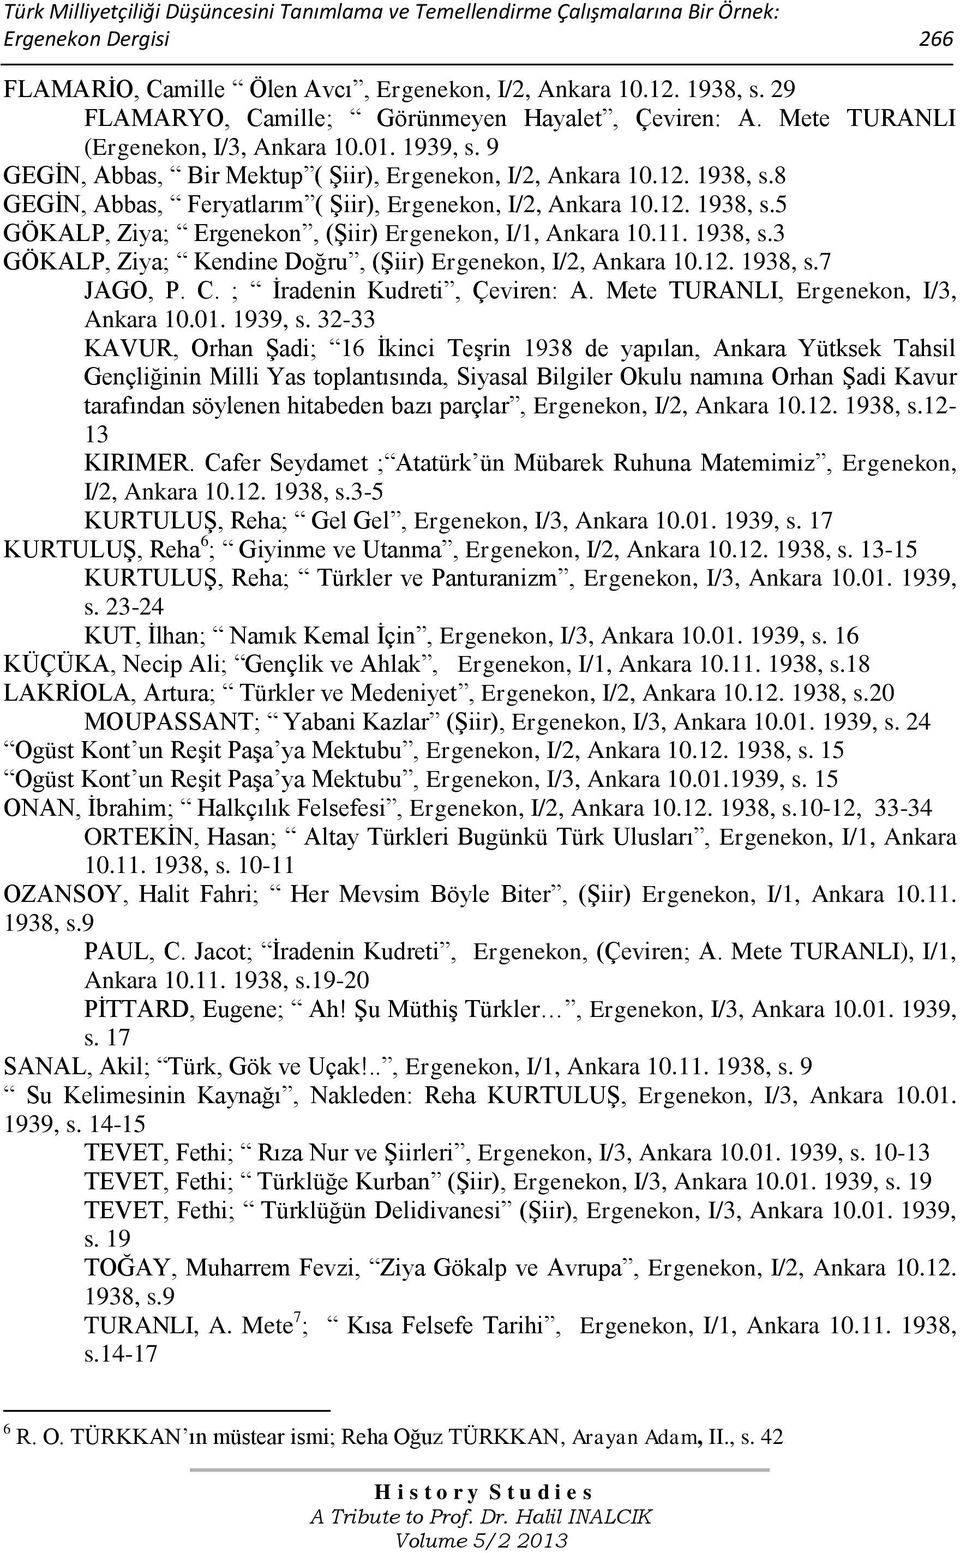 8 GEGİN, Abbas, Feryatlarım ( Şiir), Ergenekon, I/2, Ankara 10.12. 1938, s.5 GÖKALP, Ziya; Ergenekon, (Şiir) Ergenekon, I/1, Ankara 10.11. 1938, s.3 GÖKALP, Ziya; Kendine Doğru, (Şiir) Ergenekon, I/2, Ankara 10.